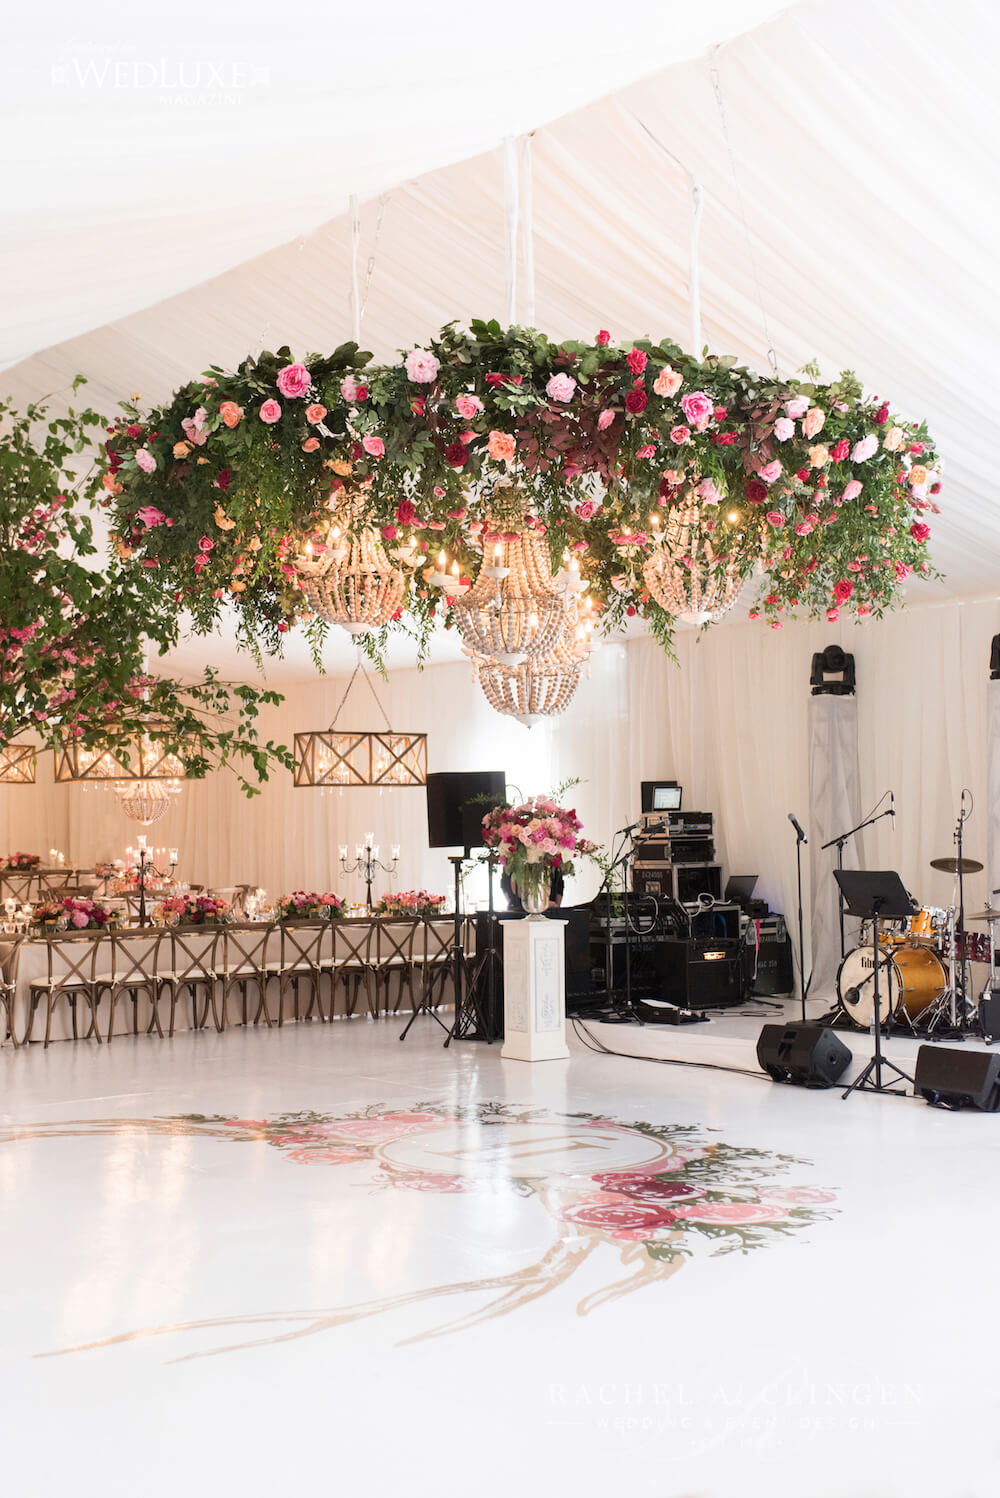 muskoka-tent-weddings-flowers